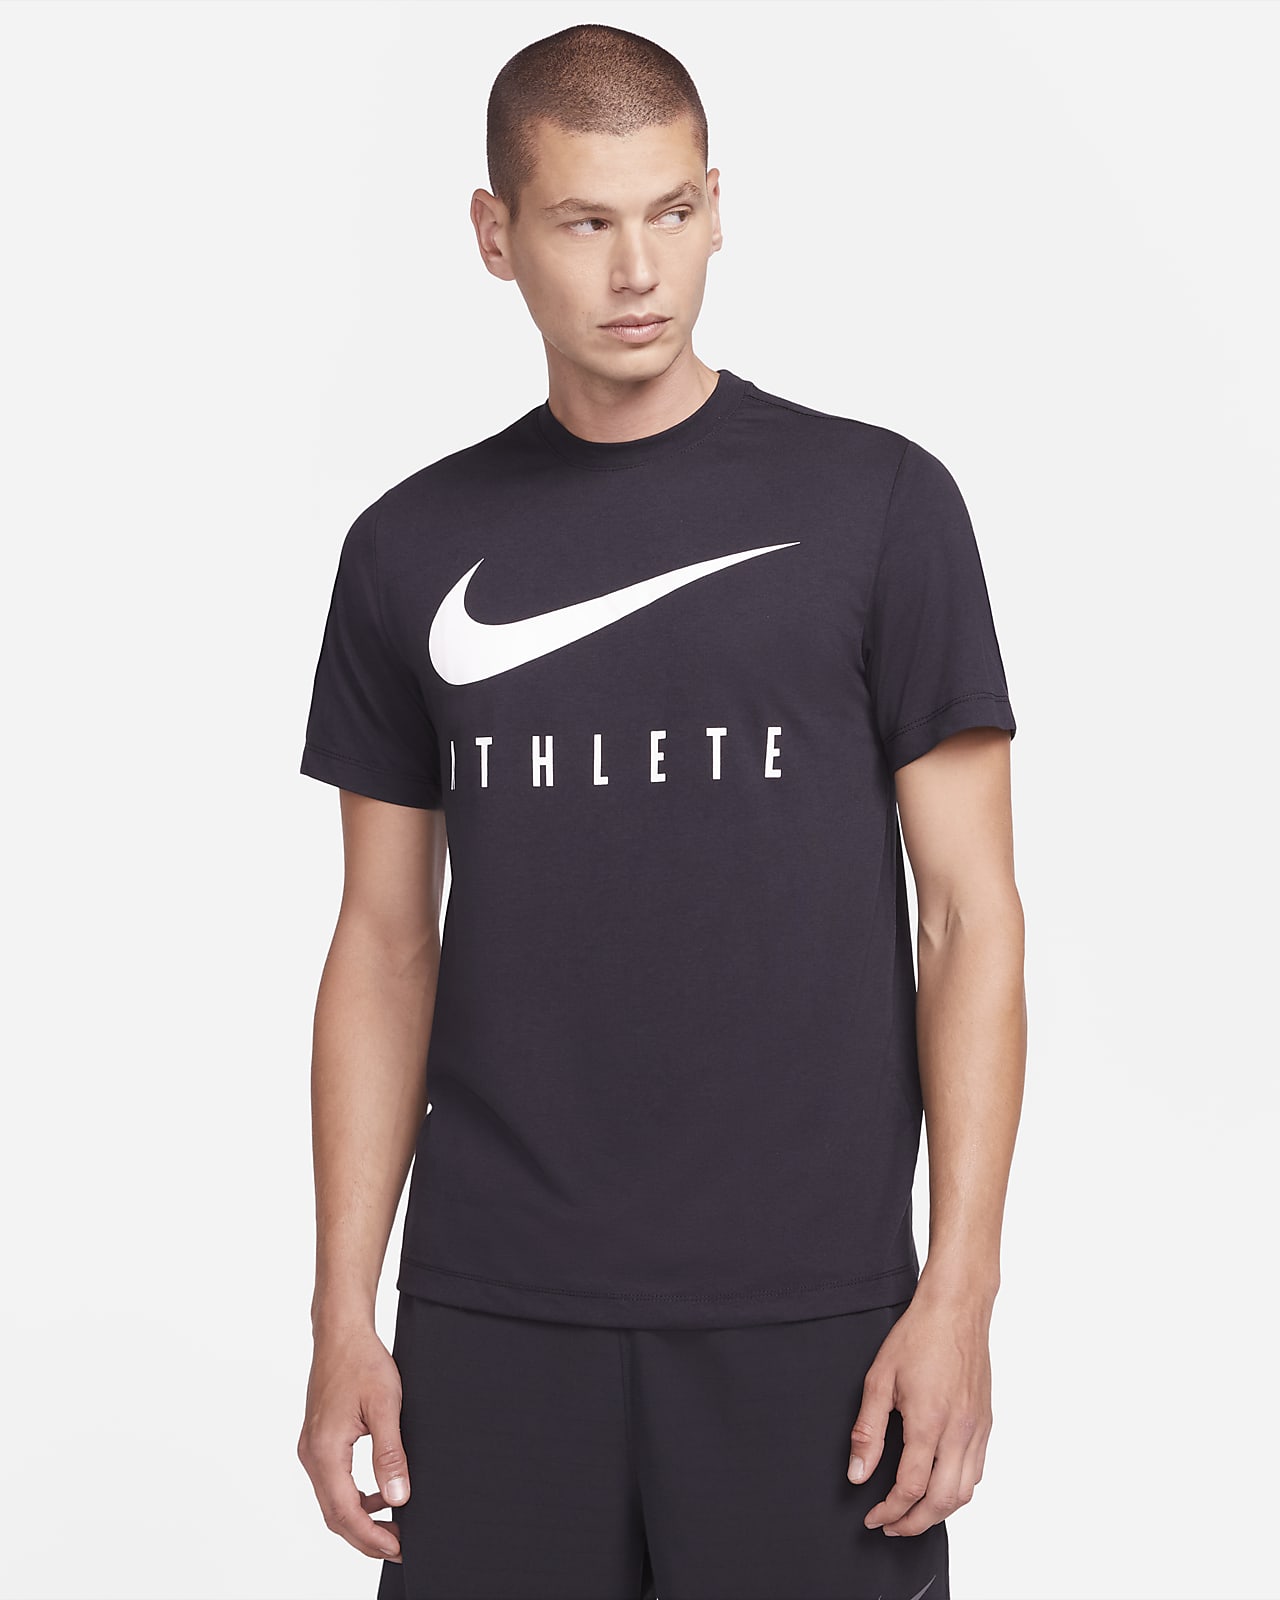 Nike Dri-FIT Training T-Shirt.